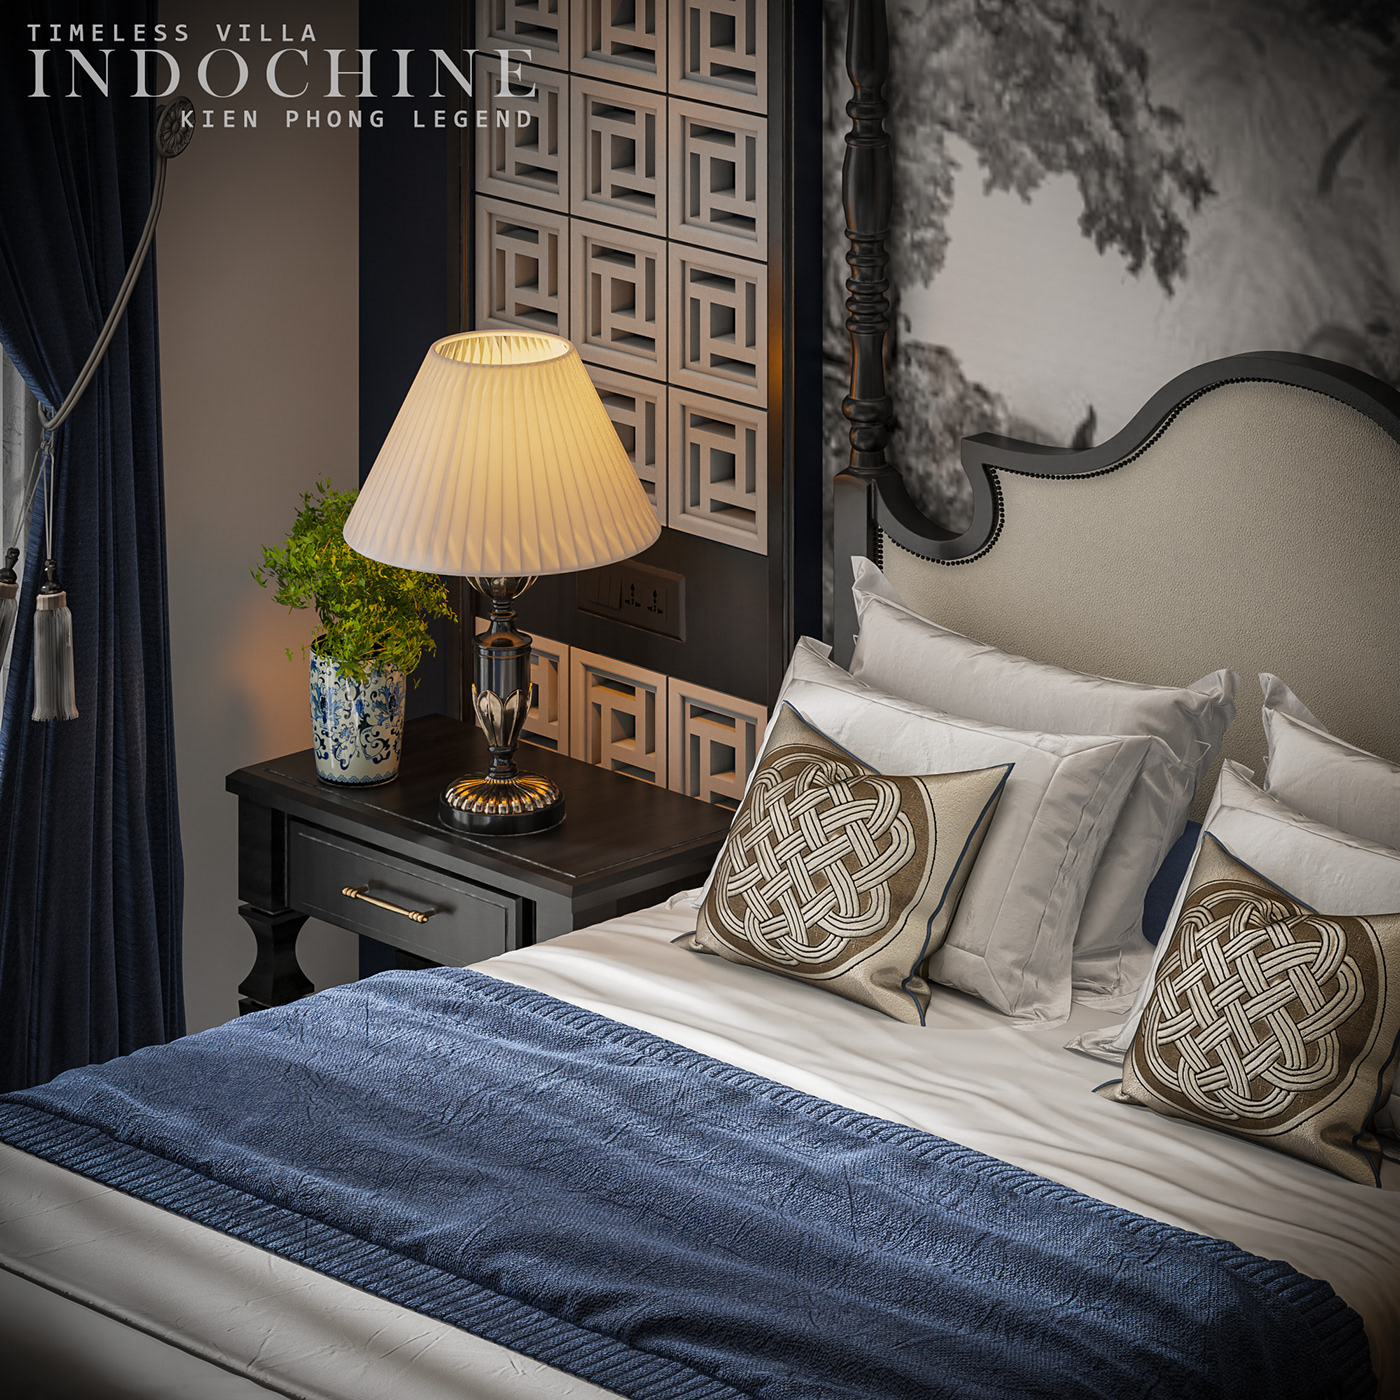 bedroomdesign design indochine indochinebedroom Interior interiordesign